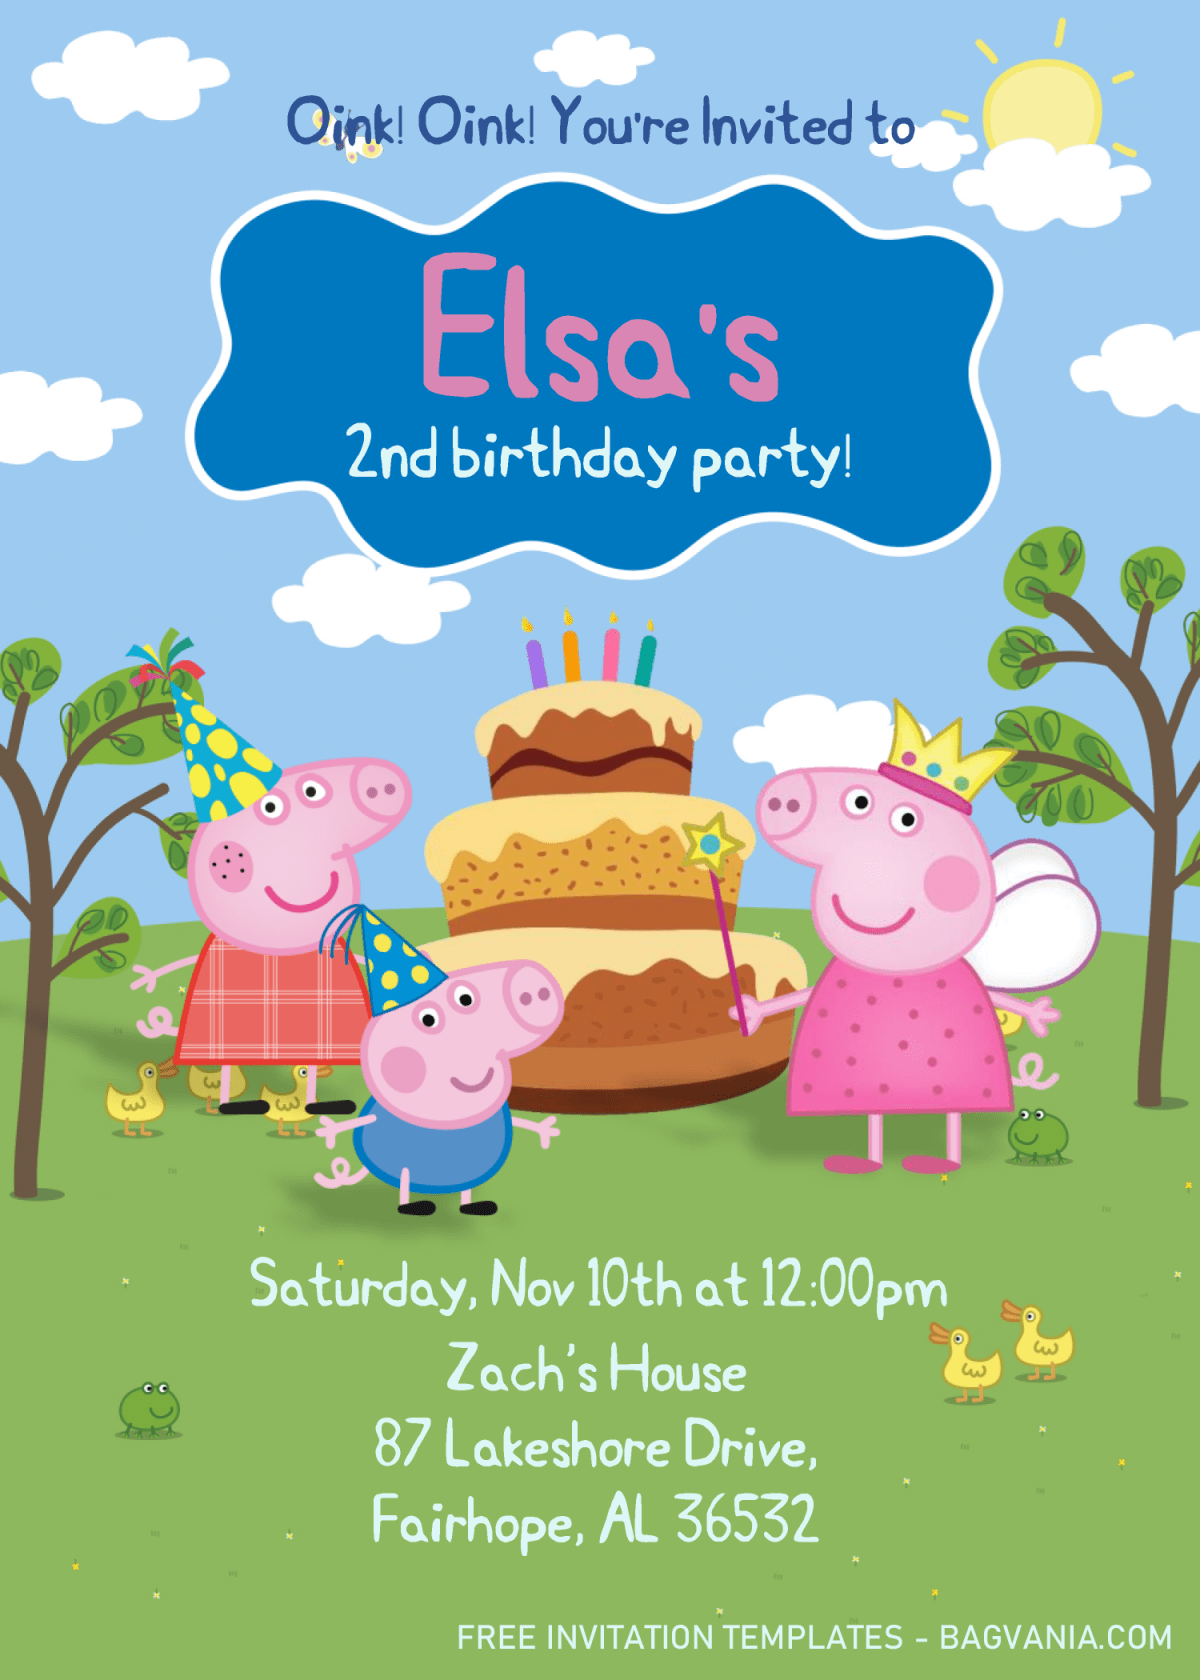 Peppa Pig Invitation Templates - Editable .Docx and has birthday hats and peppa fairy